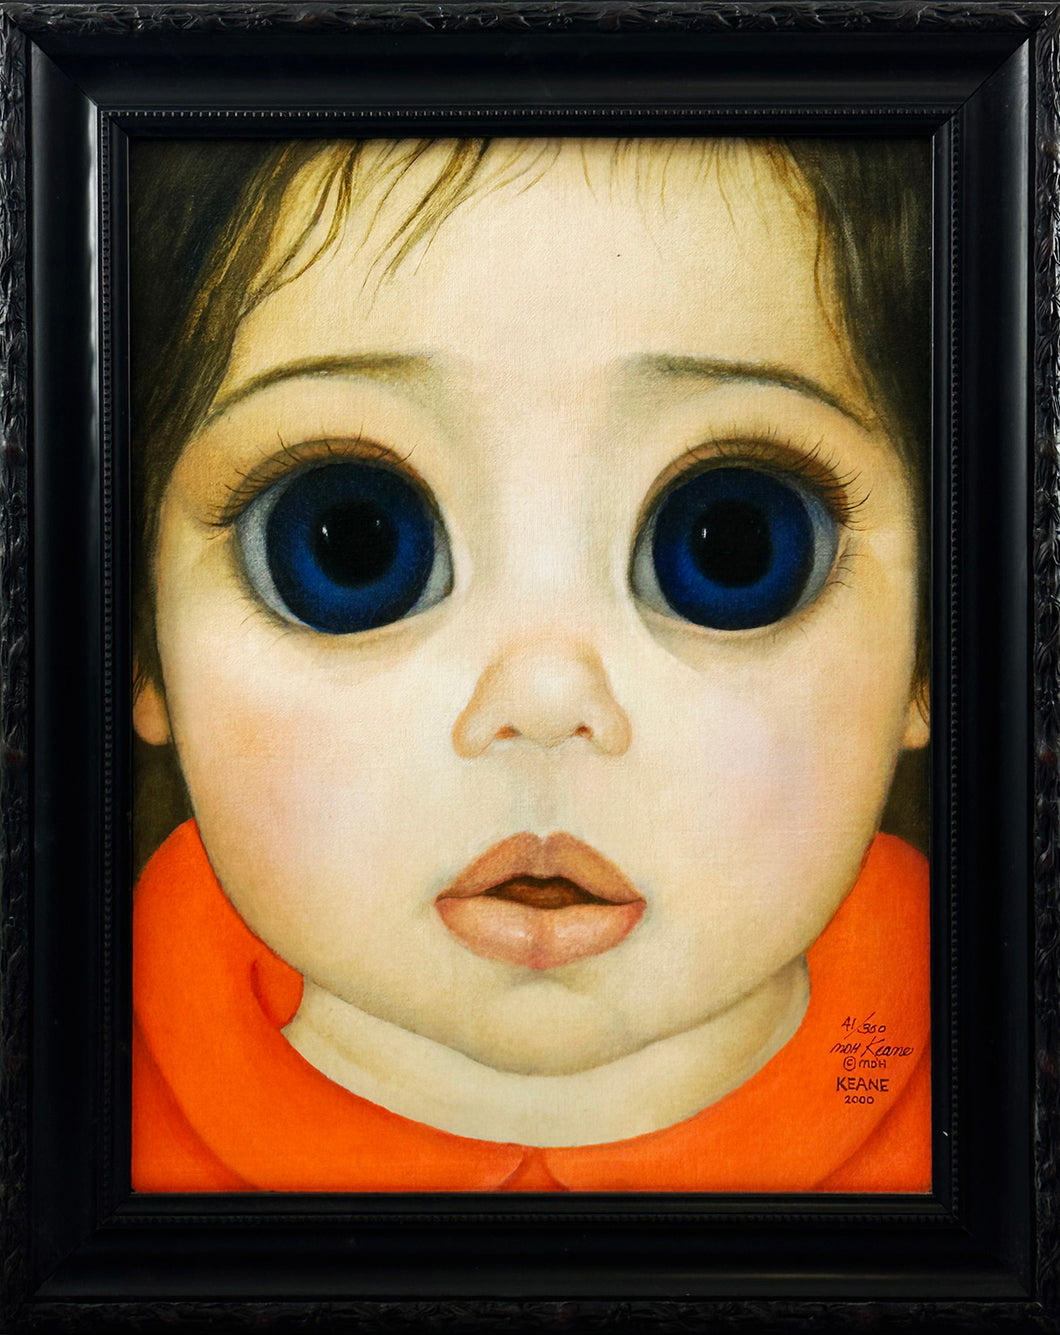 The story of artist Margaret Keane that inspired 'Big Eyes